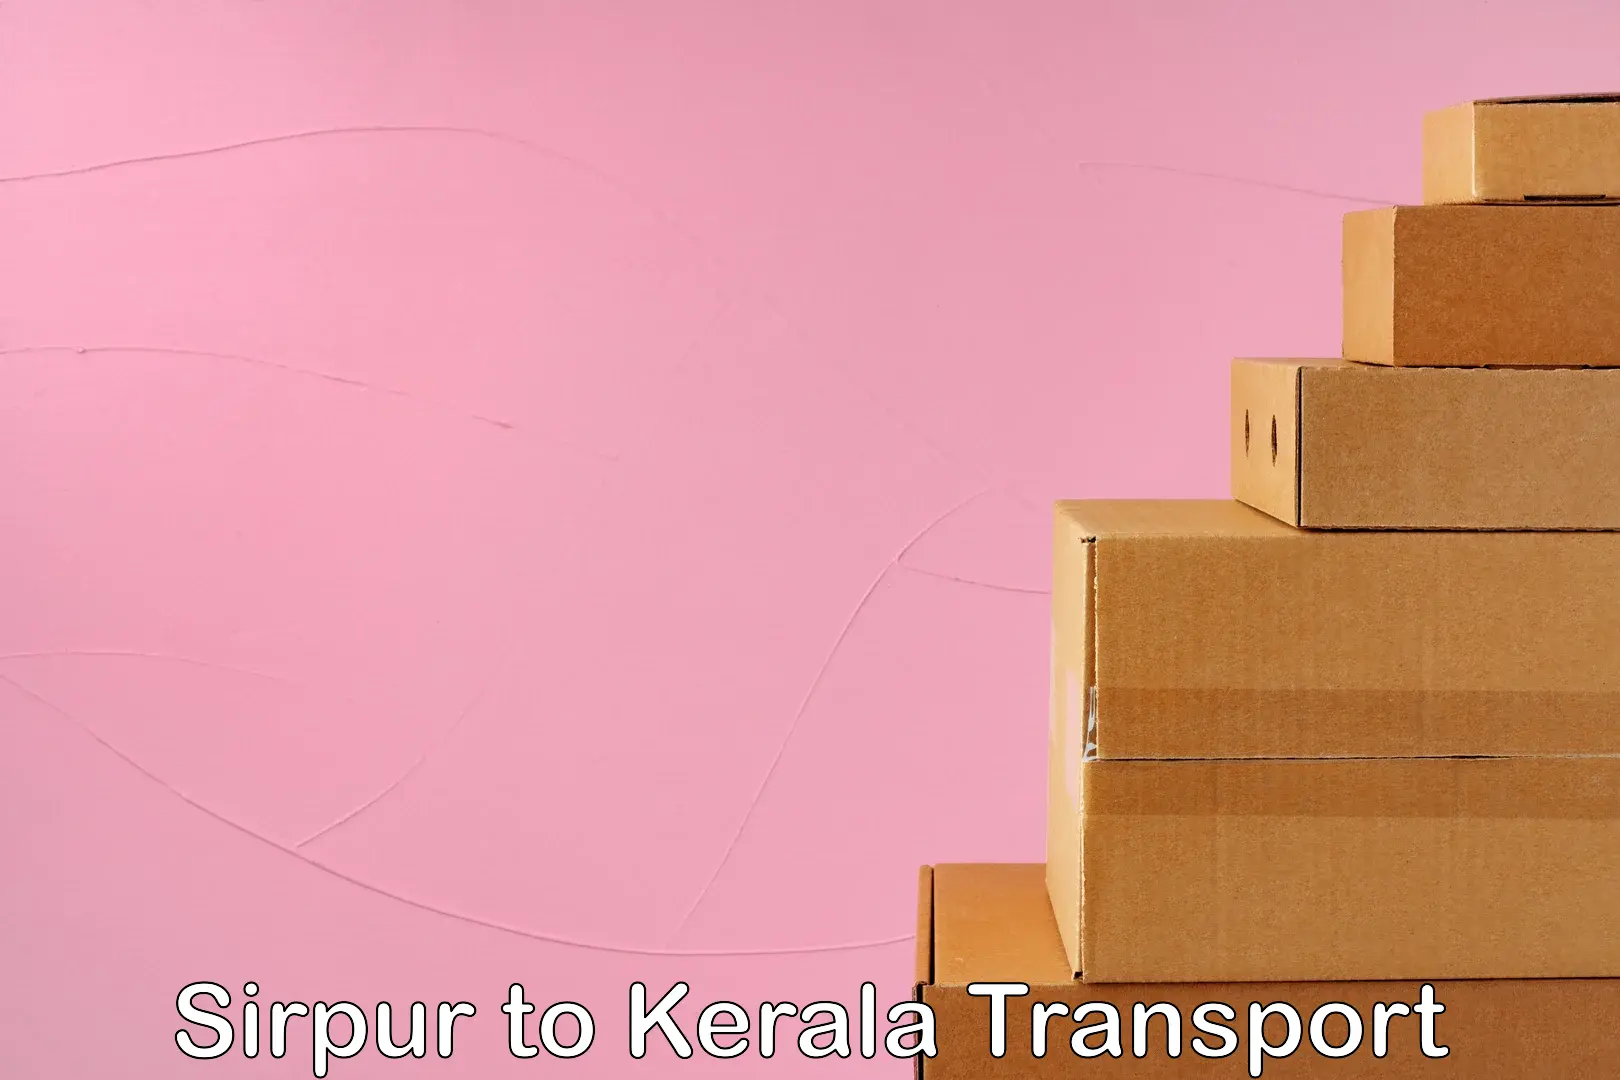 Daily transport service Sirpur to Pandikkad